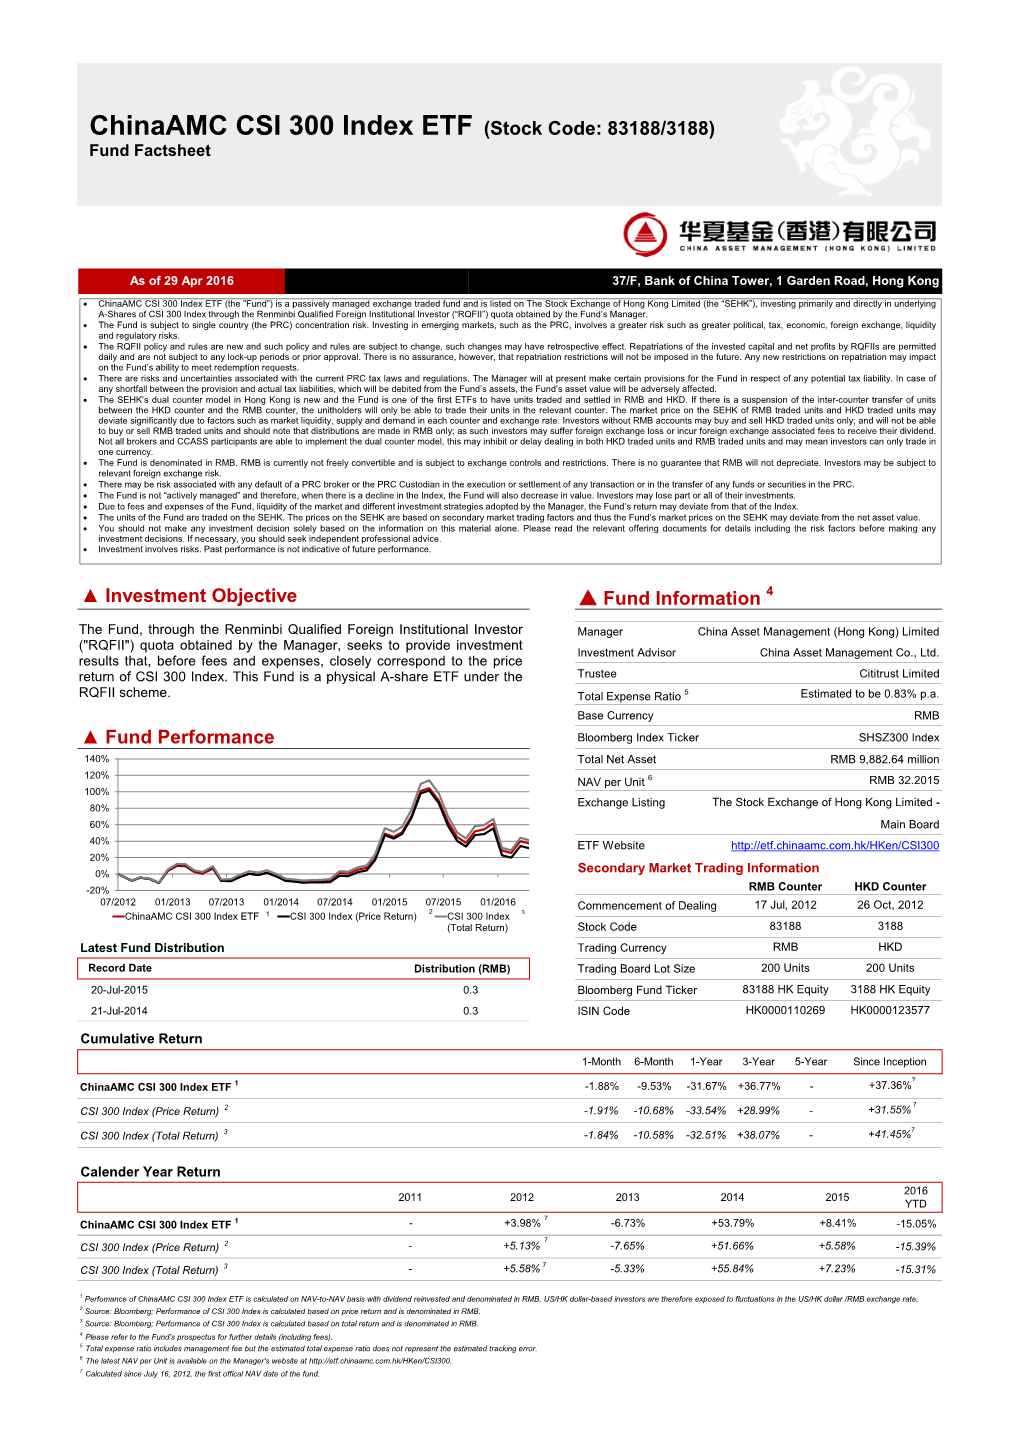 Chinaamc CSI 300 Index ETF (Stock Code: 83188/3188) Fund Factsheet